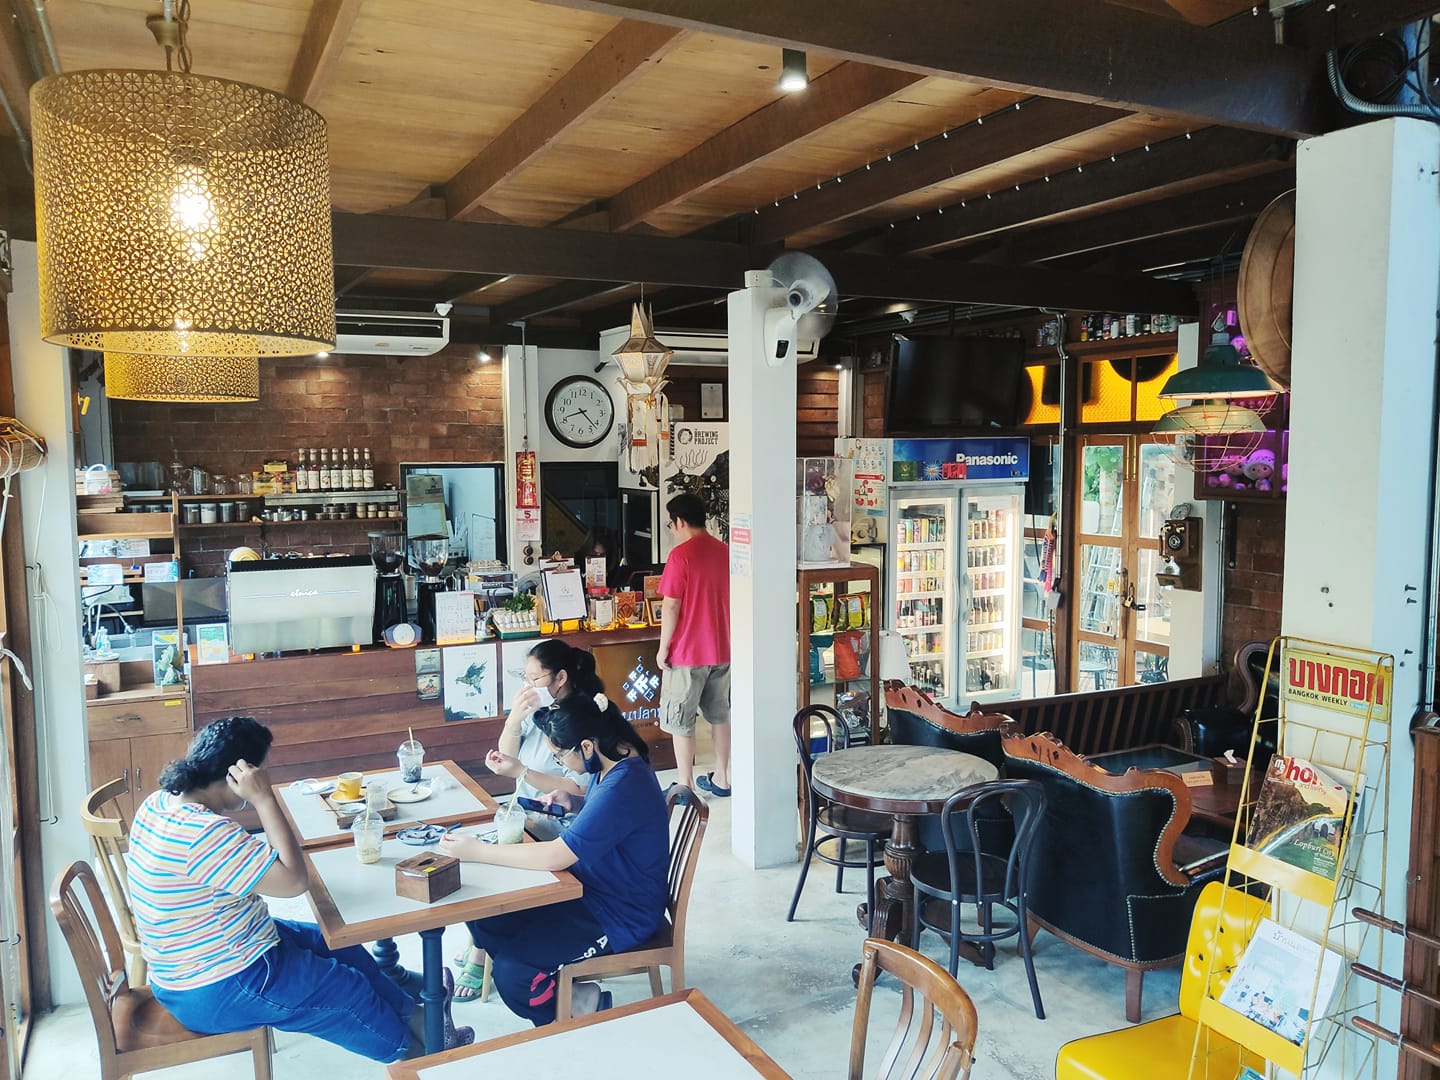 Baanplachum Cafe (บ้านปลาชุม) : Chachoengsao (ฉะเชิงเทรา)